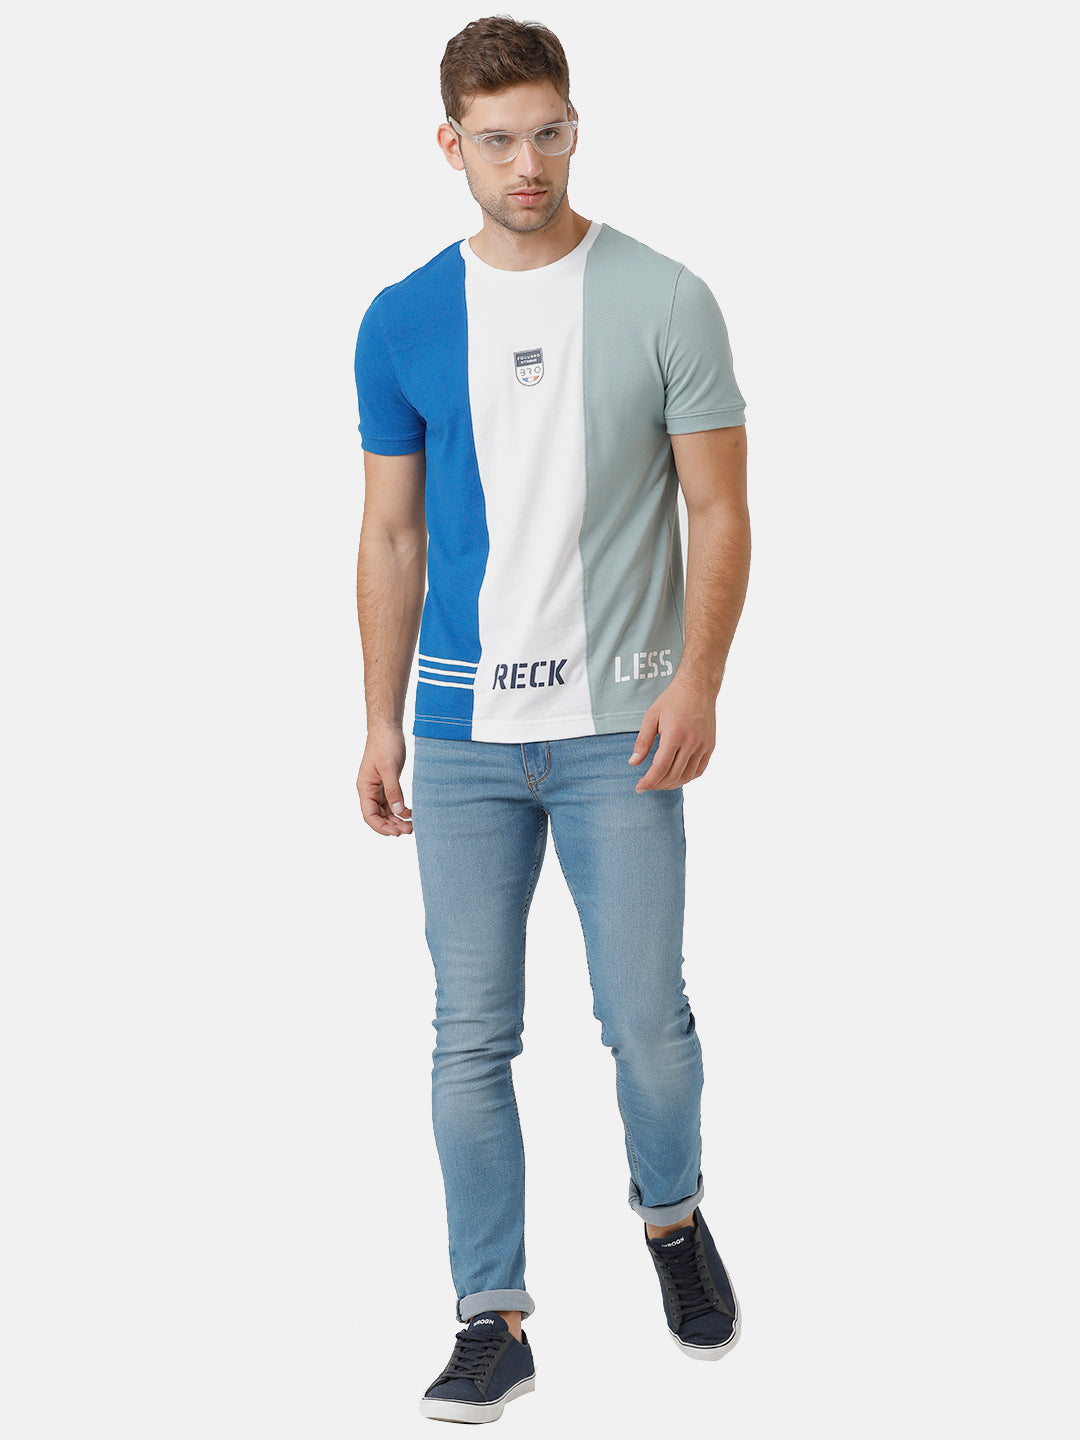 CP BRO Men's Cotton Half Sleeve Color Block Slim Fit Round Neck Multicolor T-Shirt | Brcn 464 B